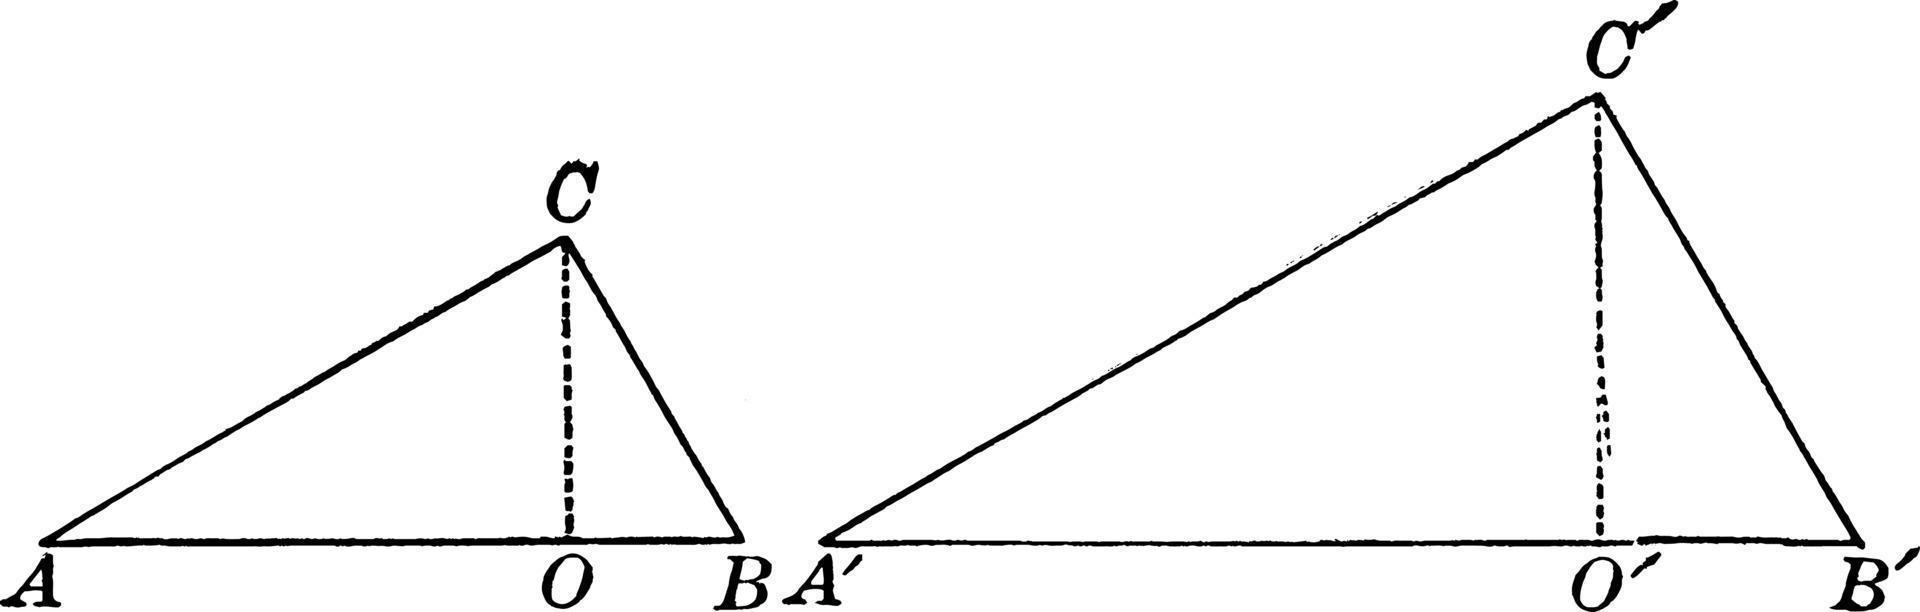 dois triângulos, ilustração vintage. vetor